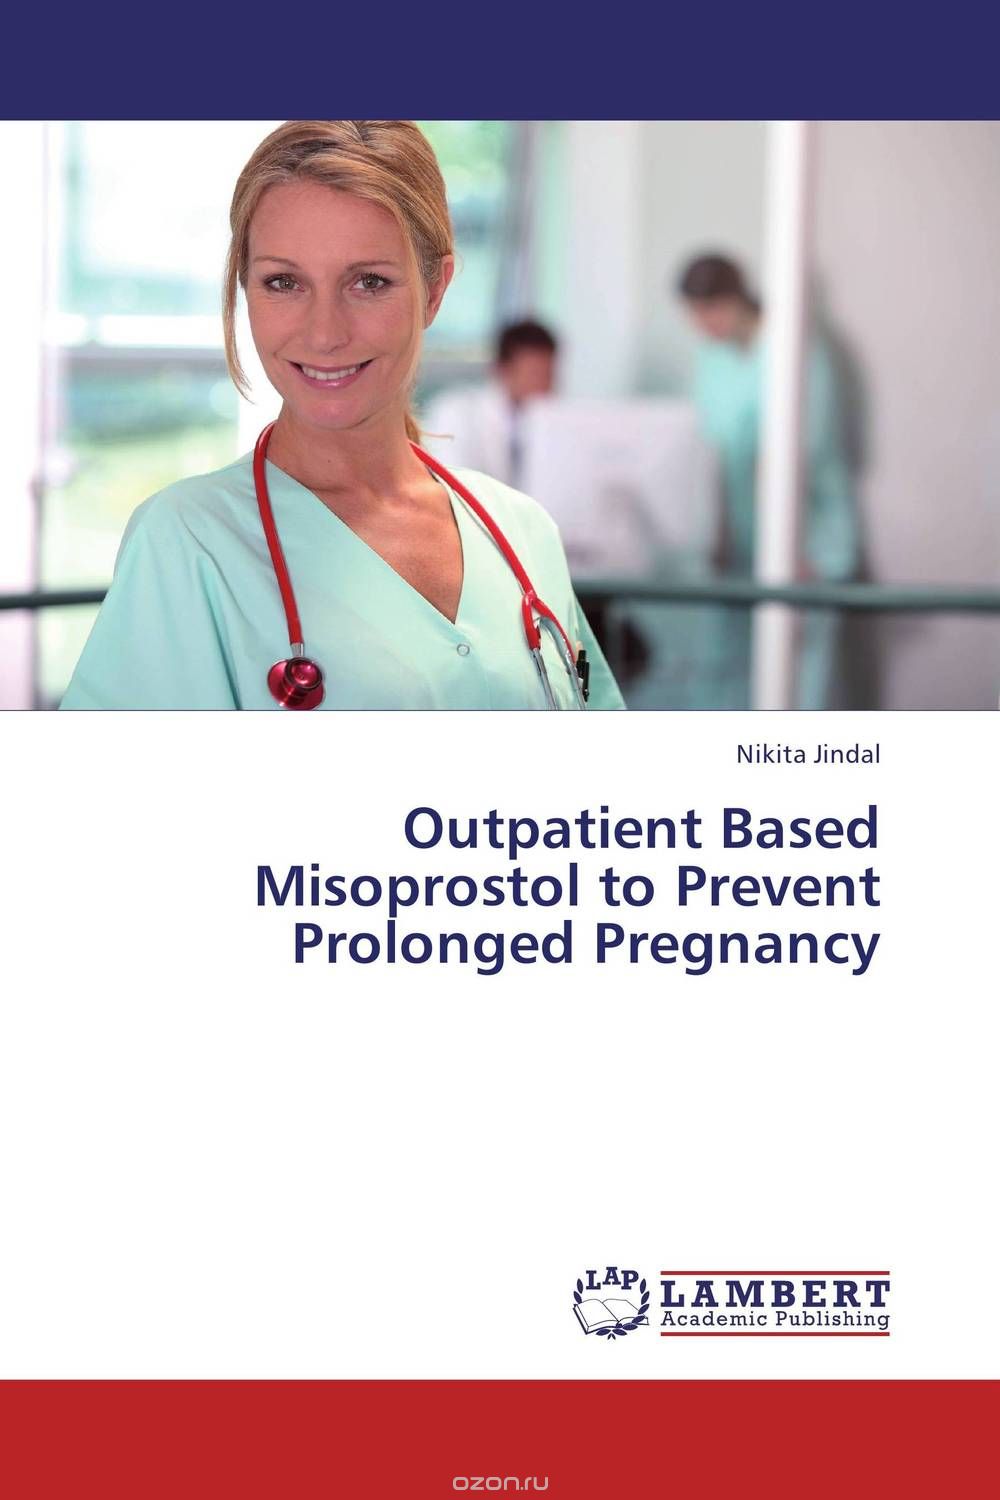 Скачать книгу "Outpatient Based Misoprostol to Prevent Prolonged Pregnancy"